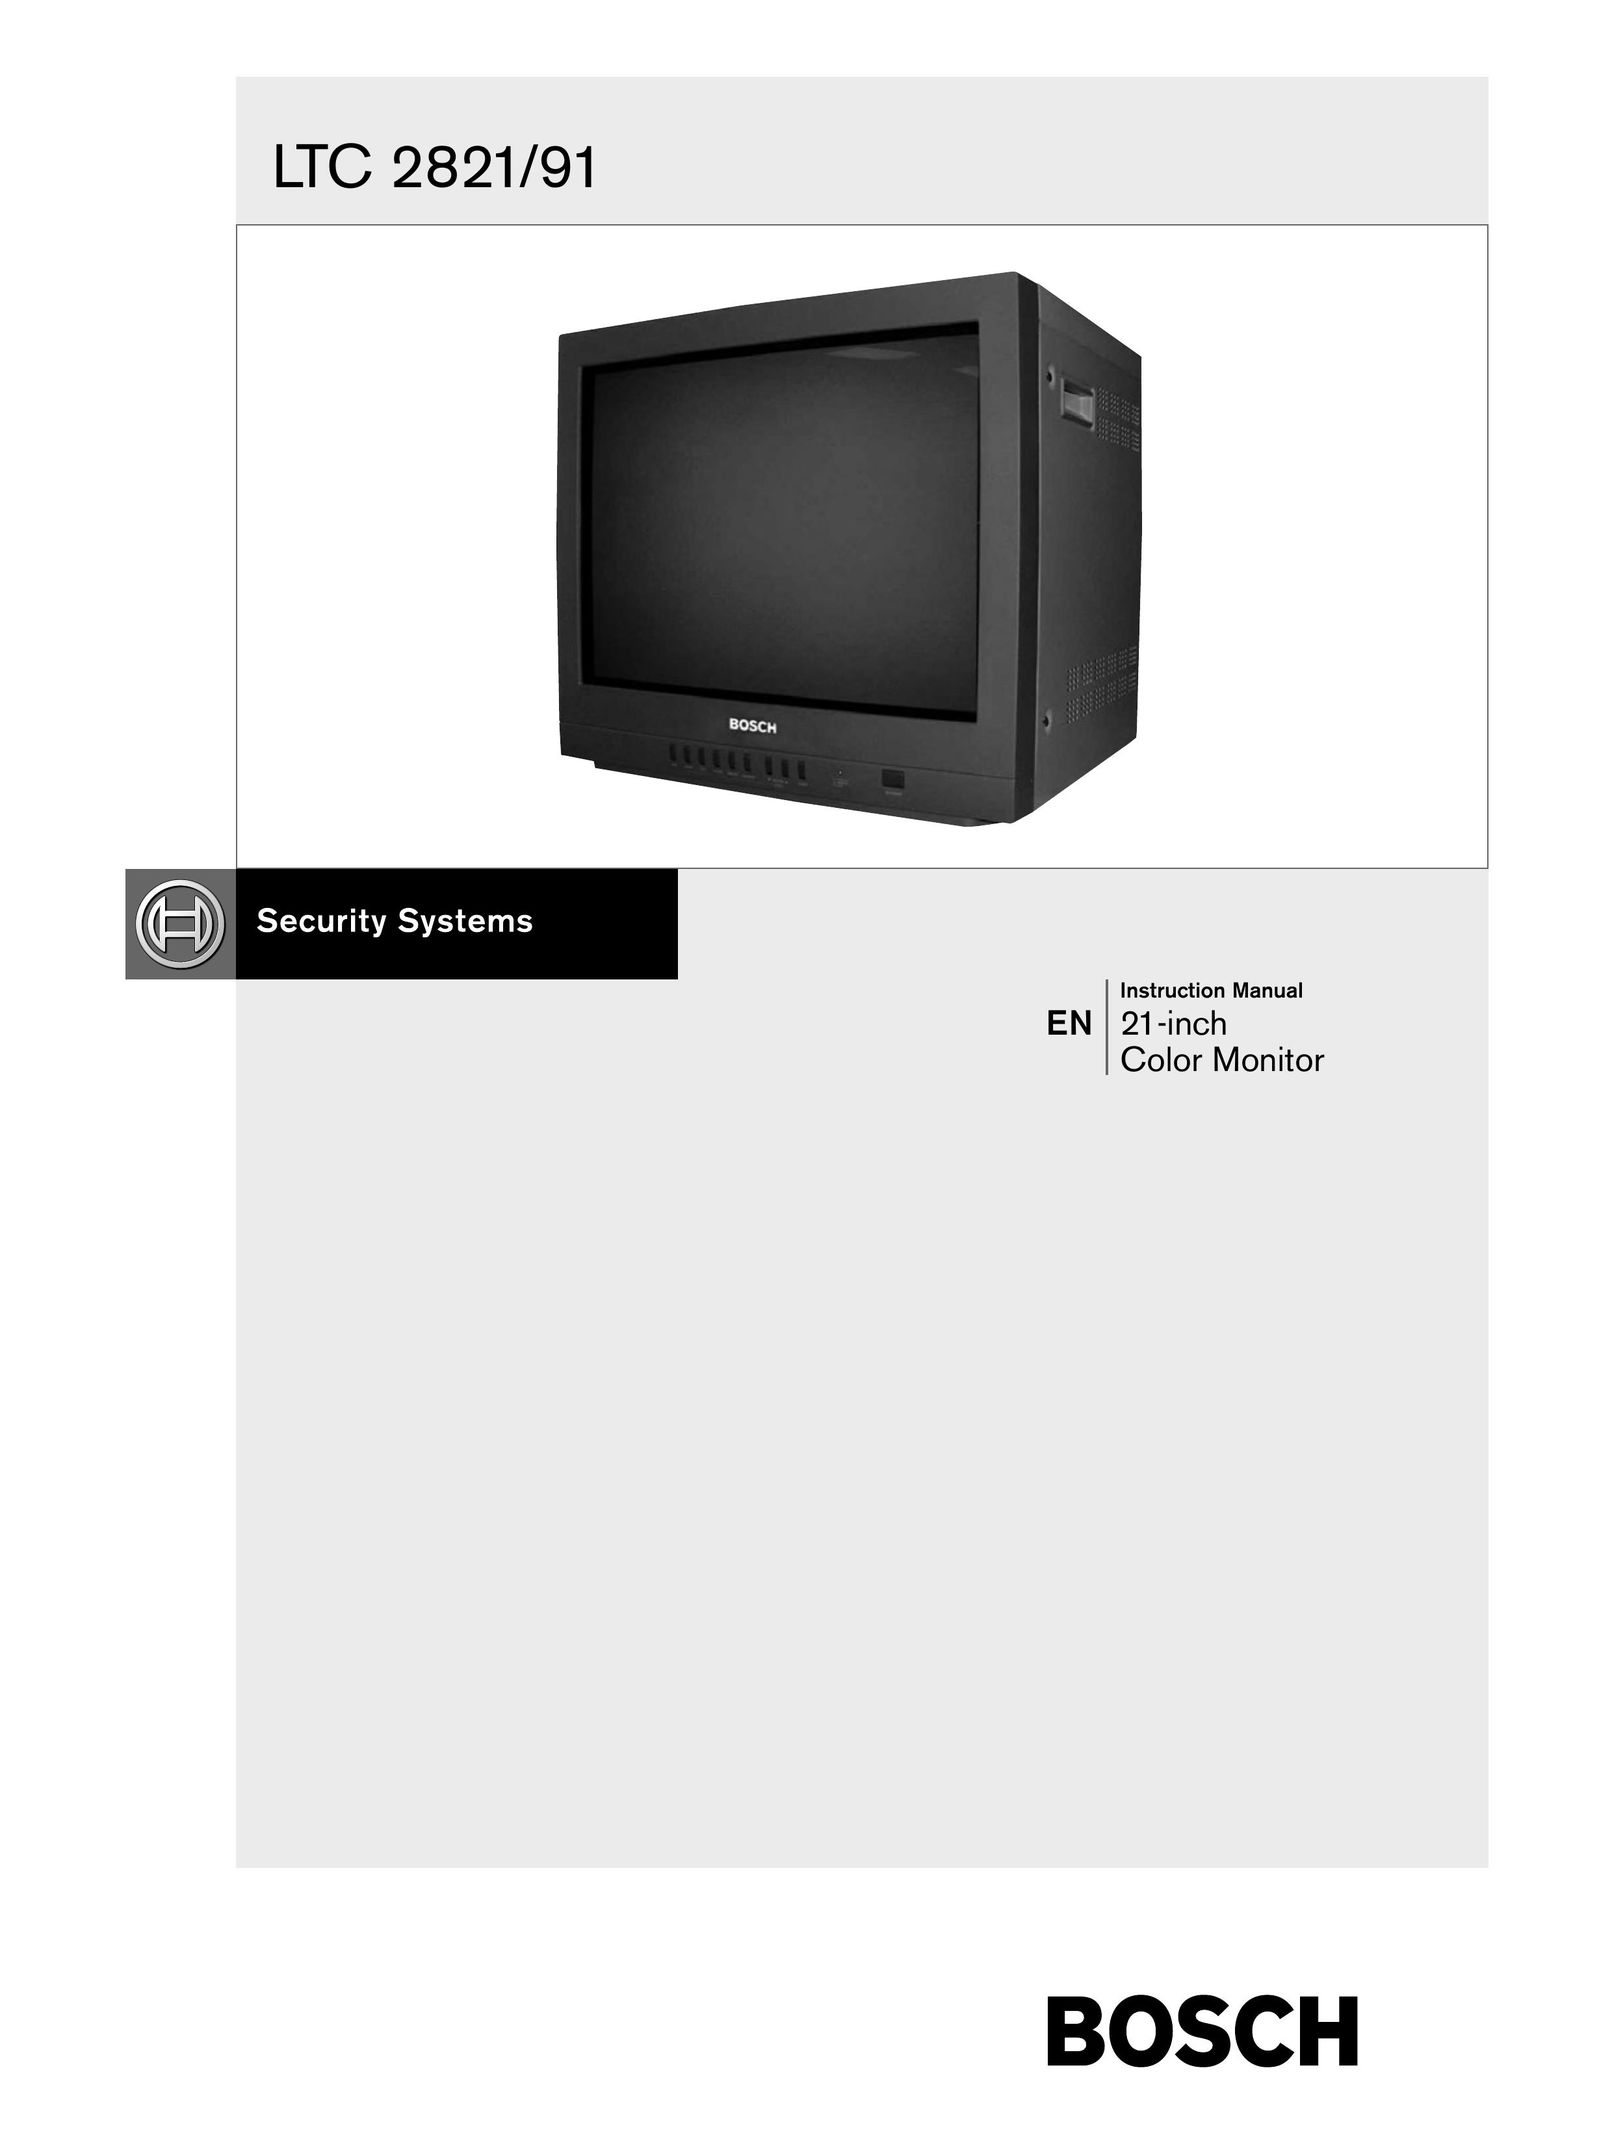 Bosch Appliances LTC 2821 CRT Television User Manual